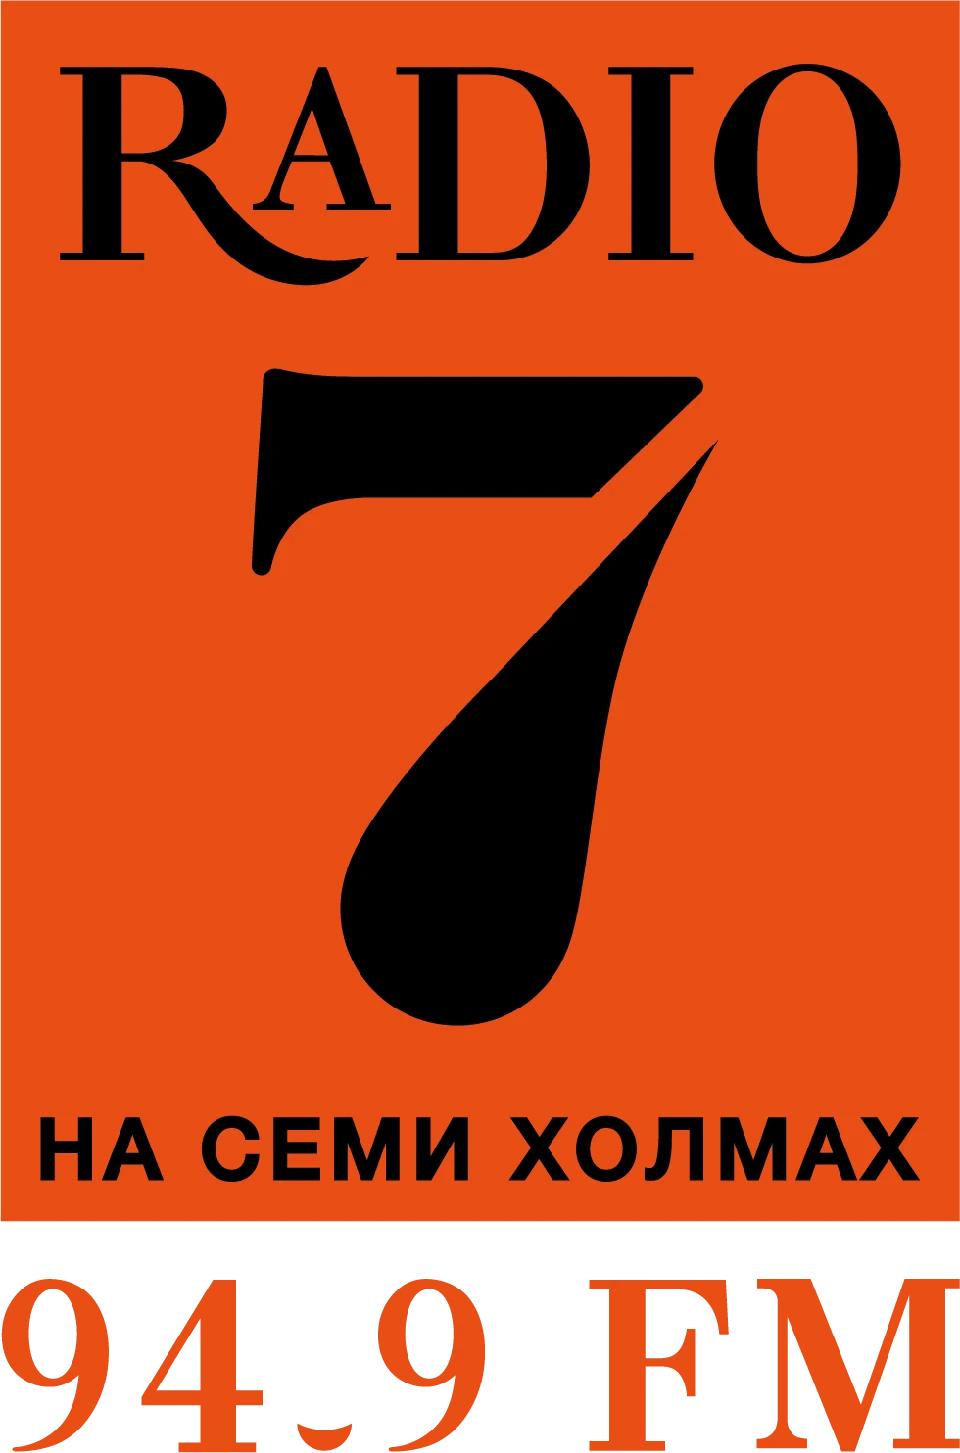 Радио 7. Радио 7 логотип. Радио 7 на семи холмах. Логотип радиостанции на 7 холмах.